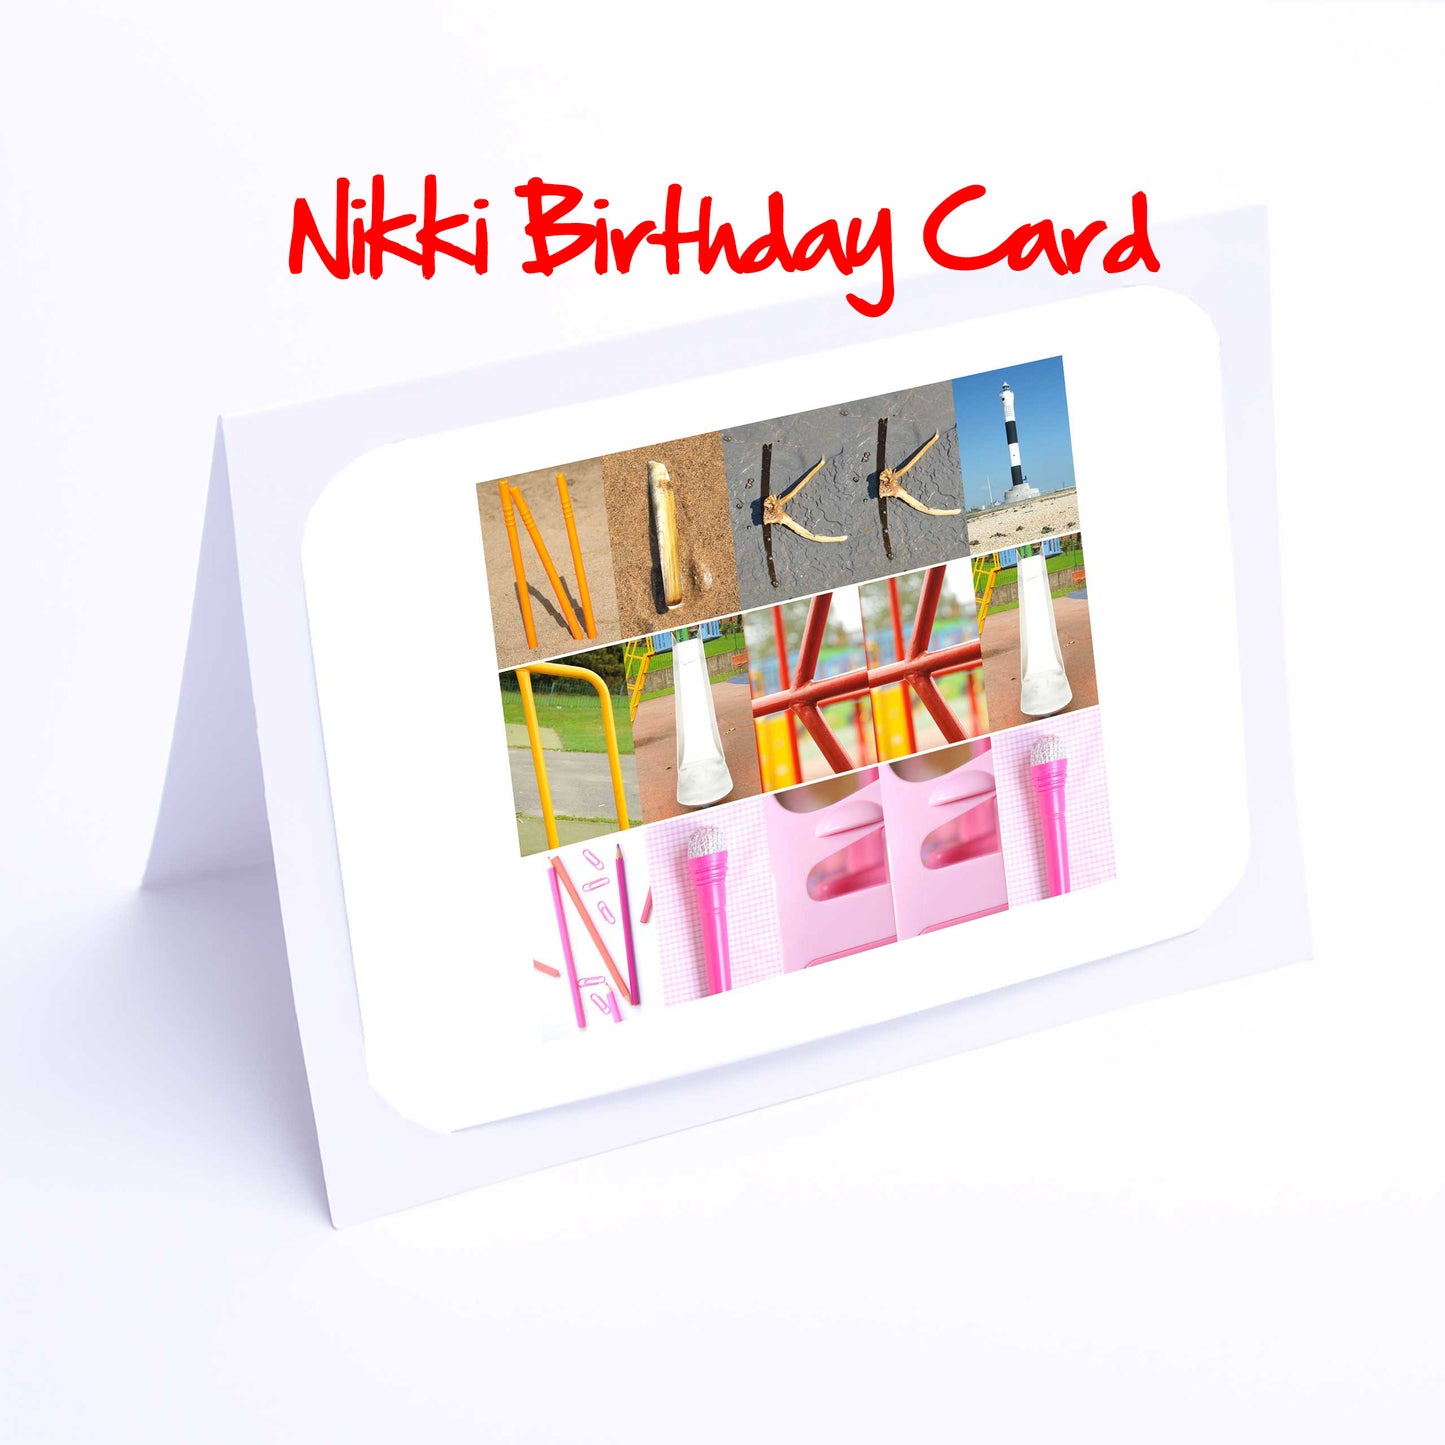 Naomi - Nyah Any name - Personalised Cards Naomi, Natalia, Natalie, Natasha, Neela, Neve, Niamh, Nicole, Nikki, Nyah, Any other name - Personalised cards